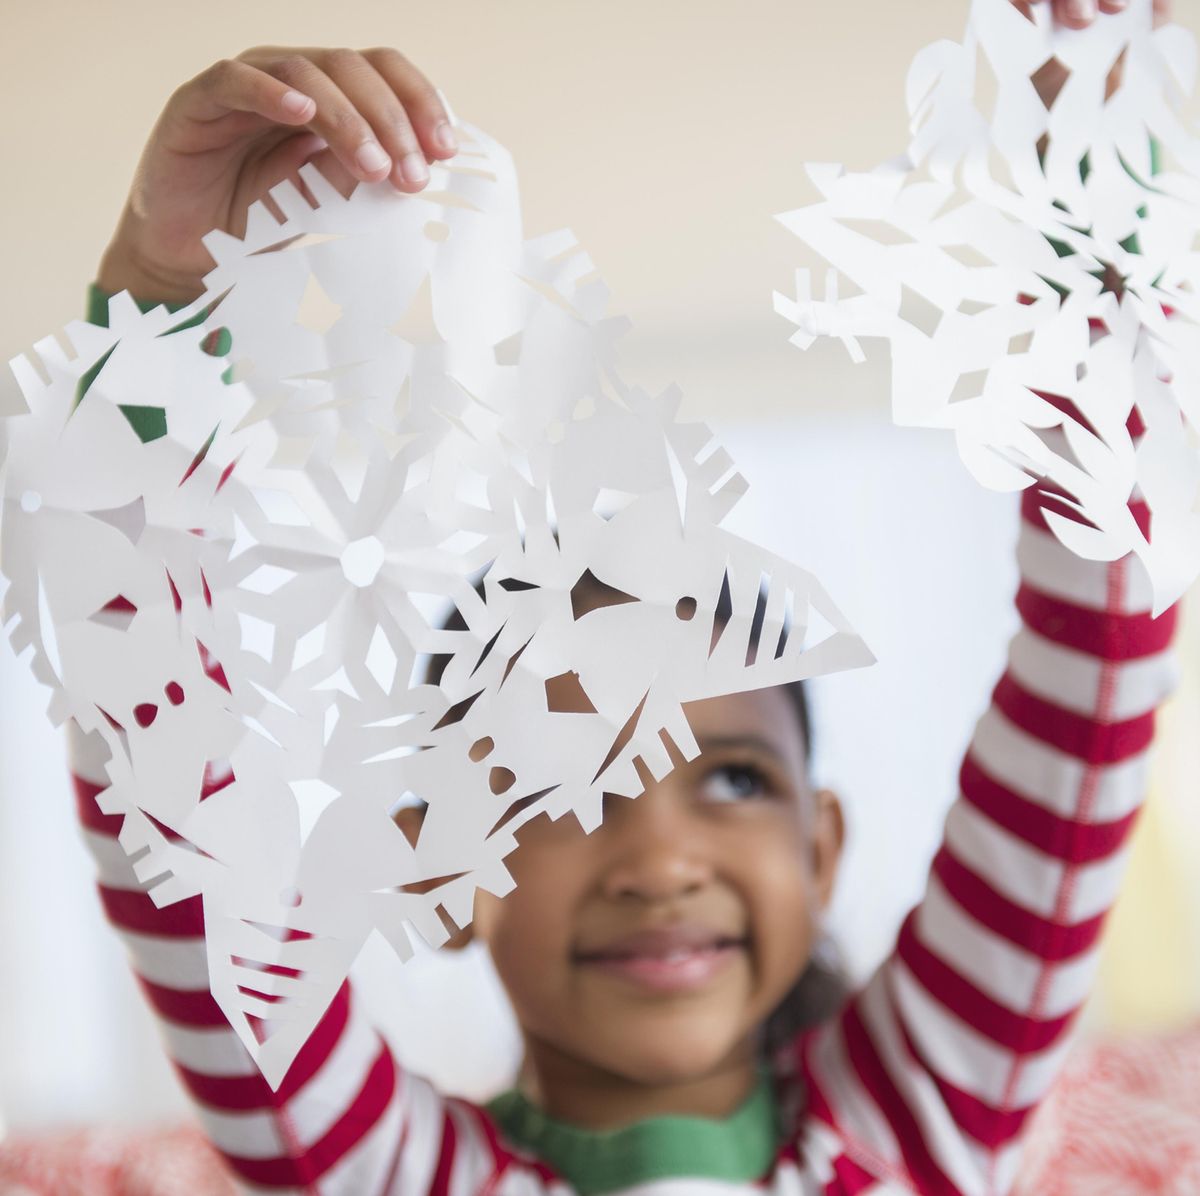 Torn Paper Snowflake Craft - Toddler at Play